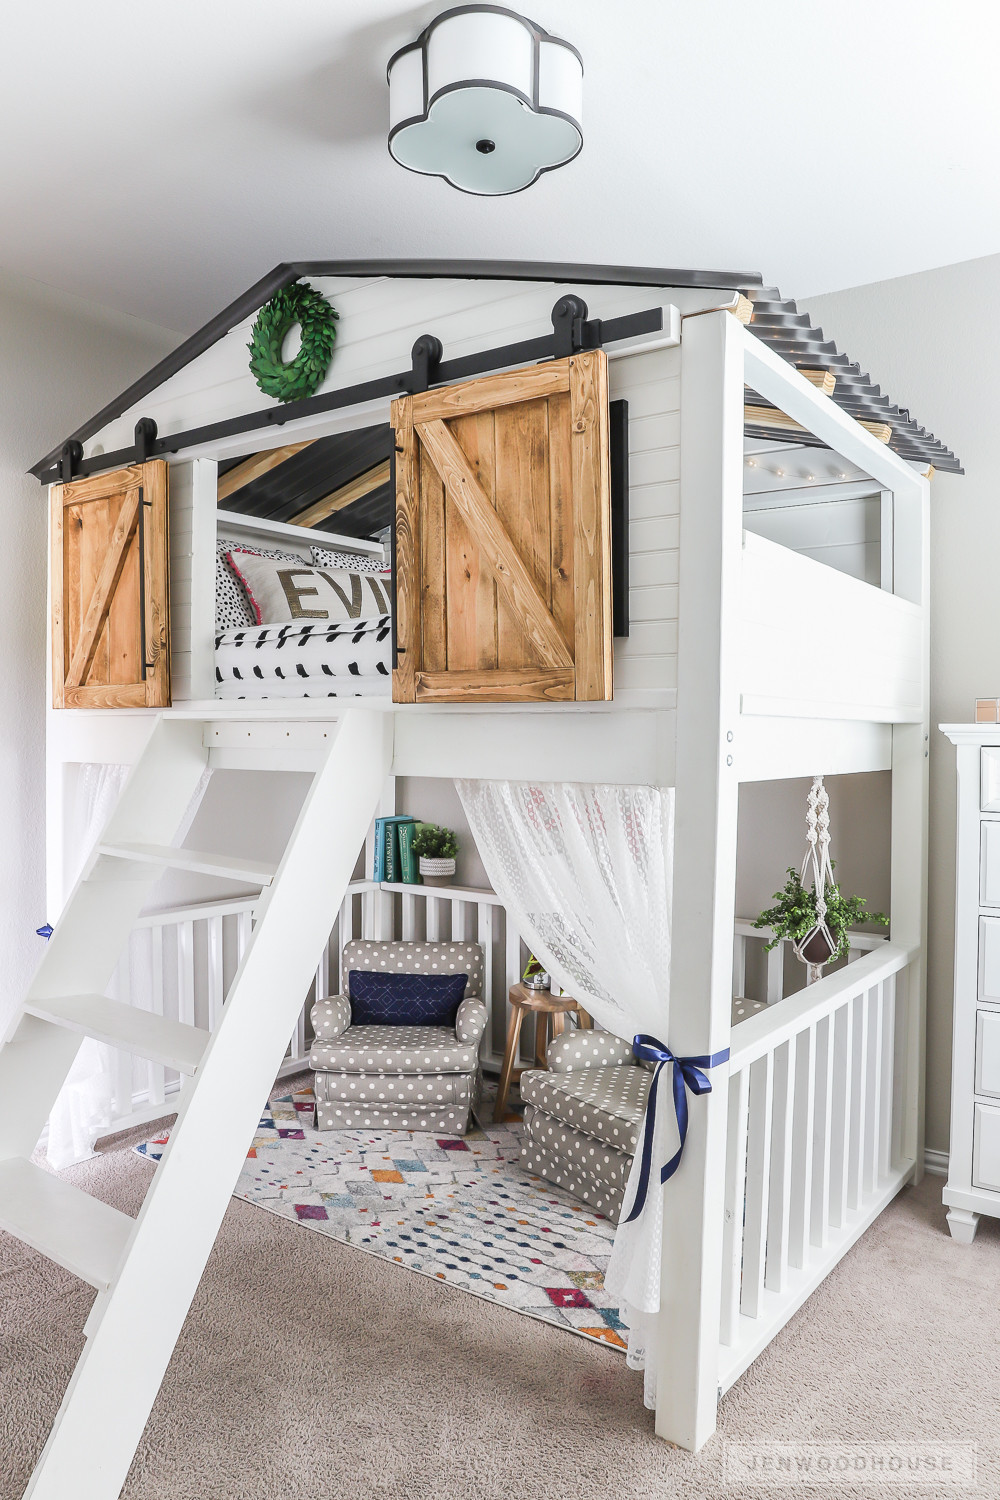 DIY Loft Beds For Kids
 How To Build A DIY Sliding Barn Door Loft Bed Full Size